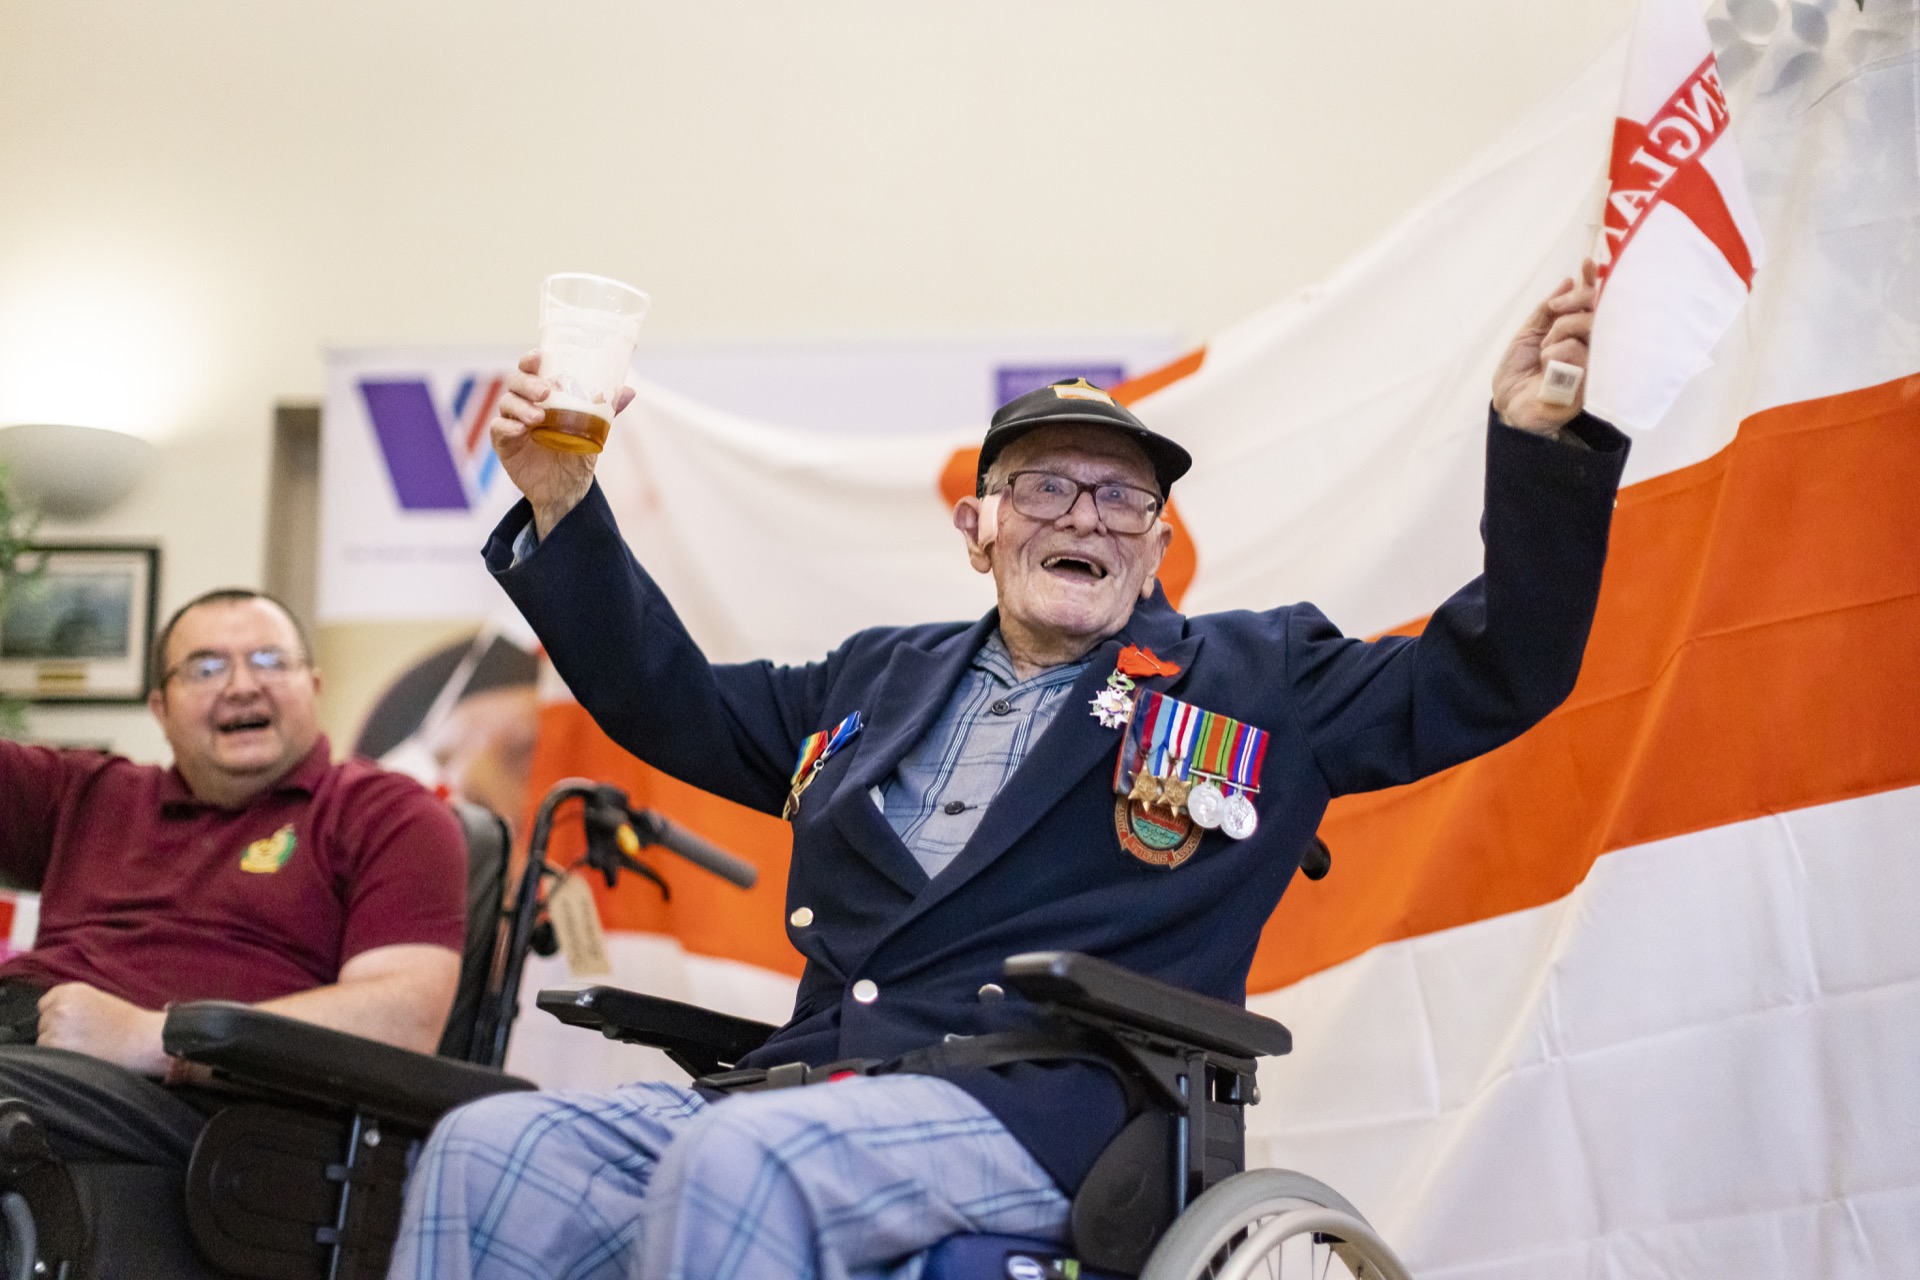 Care for Veterans’ Residents Celebrate England’s European Championship Semi Final Win Last Night